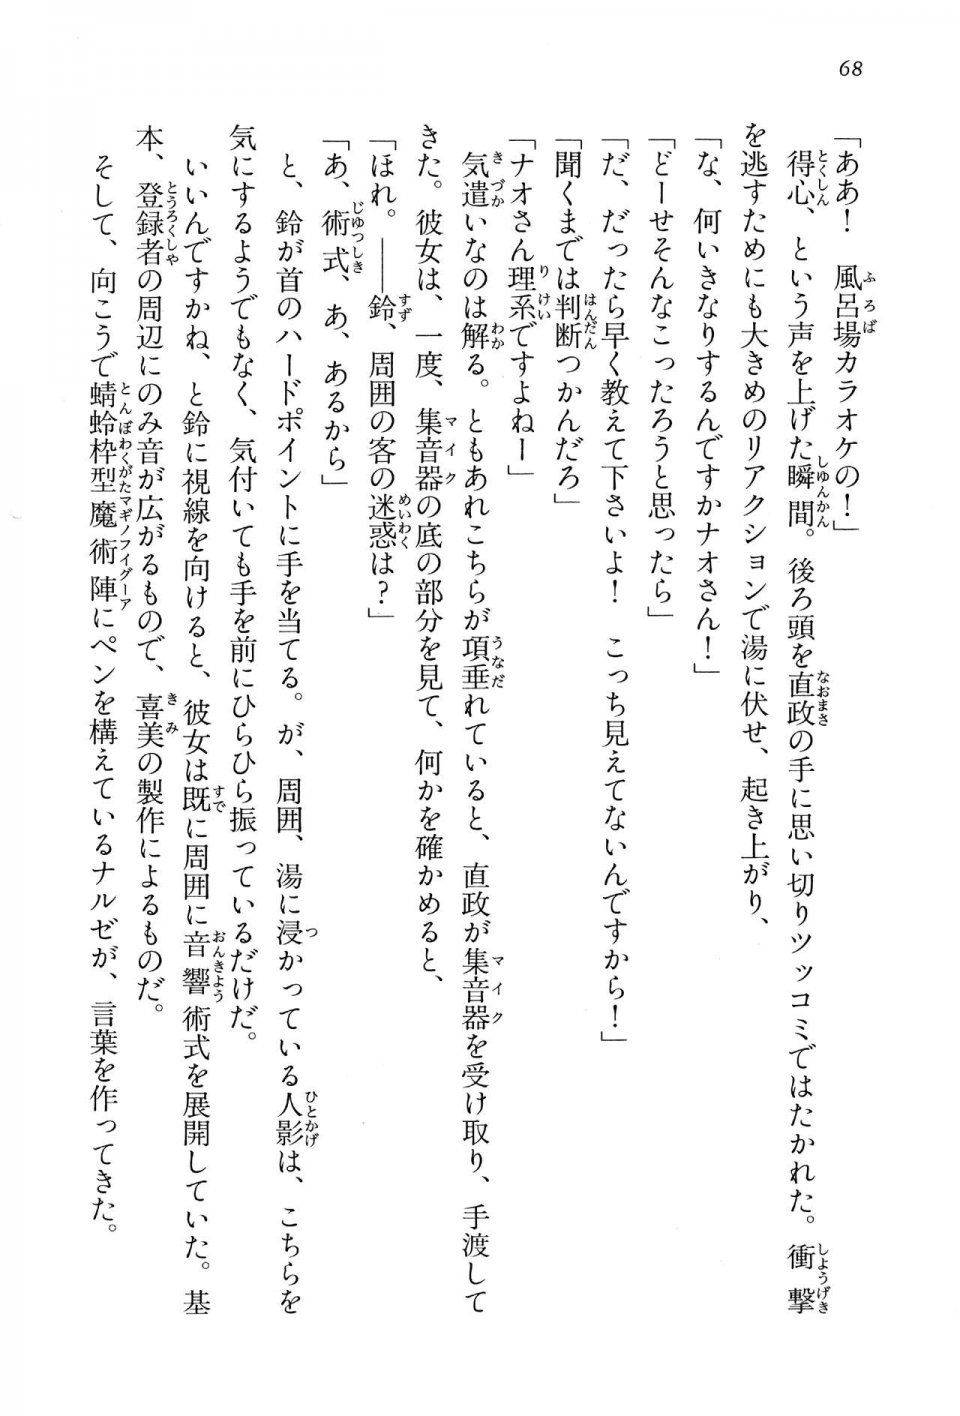 Kyoukai Senjou no Horizon BD Special Mininovel Vol 3(2A) - Photo #72